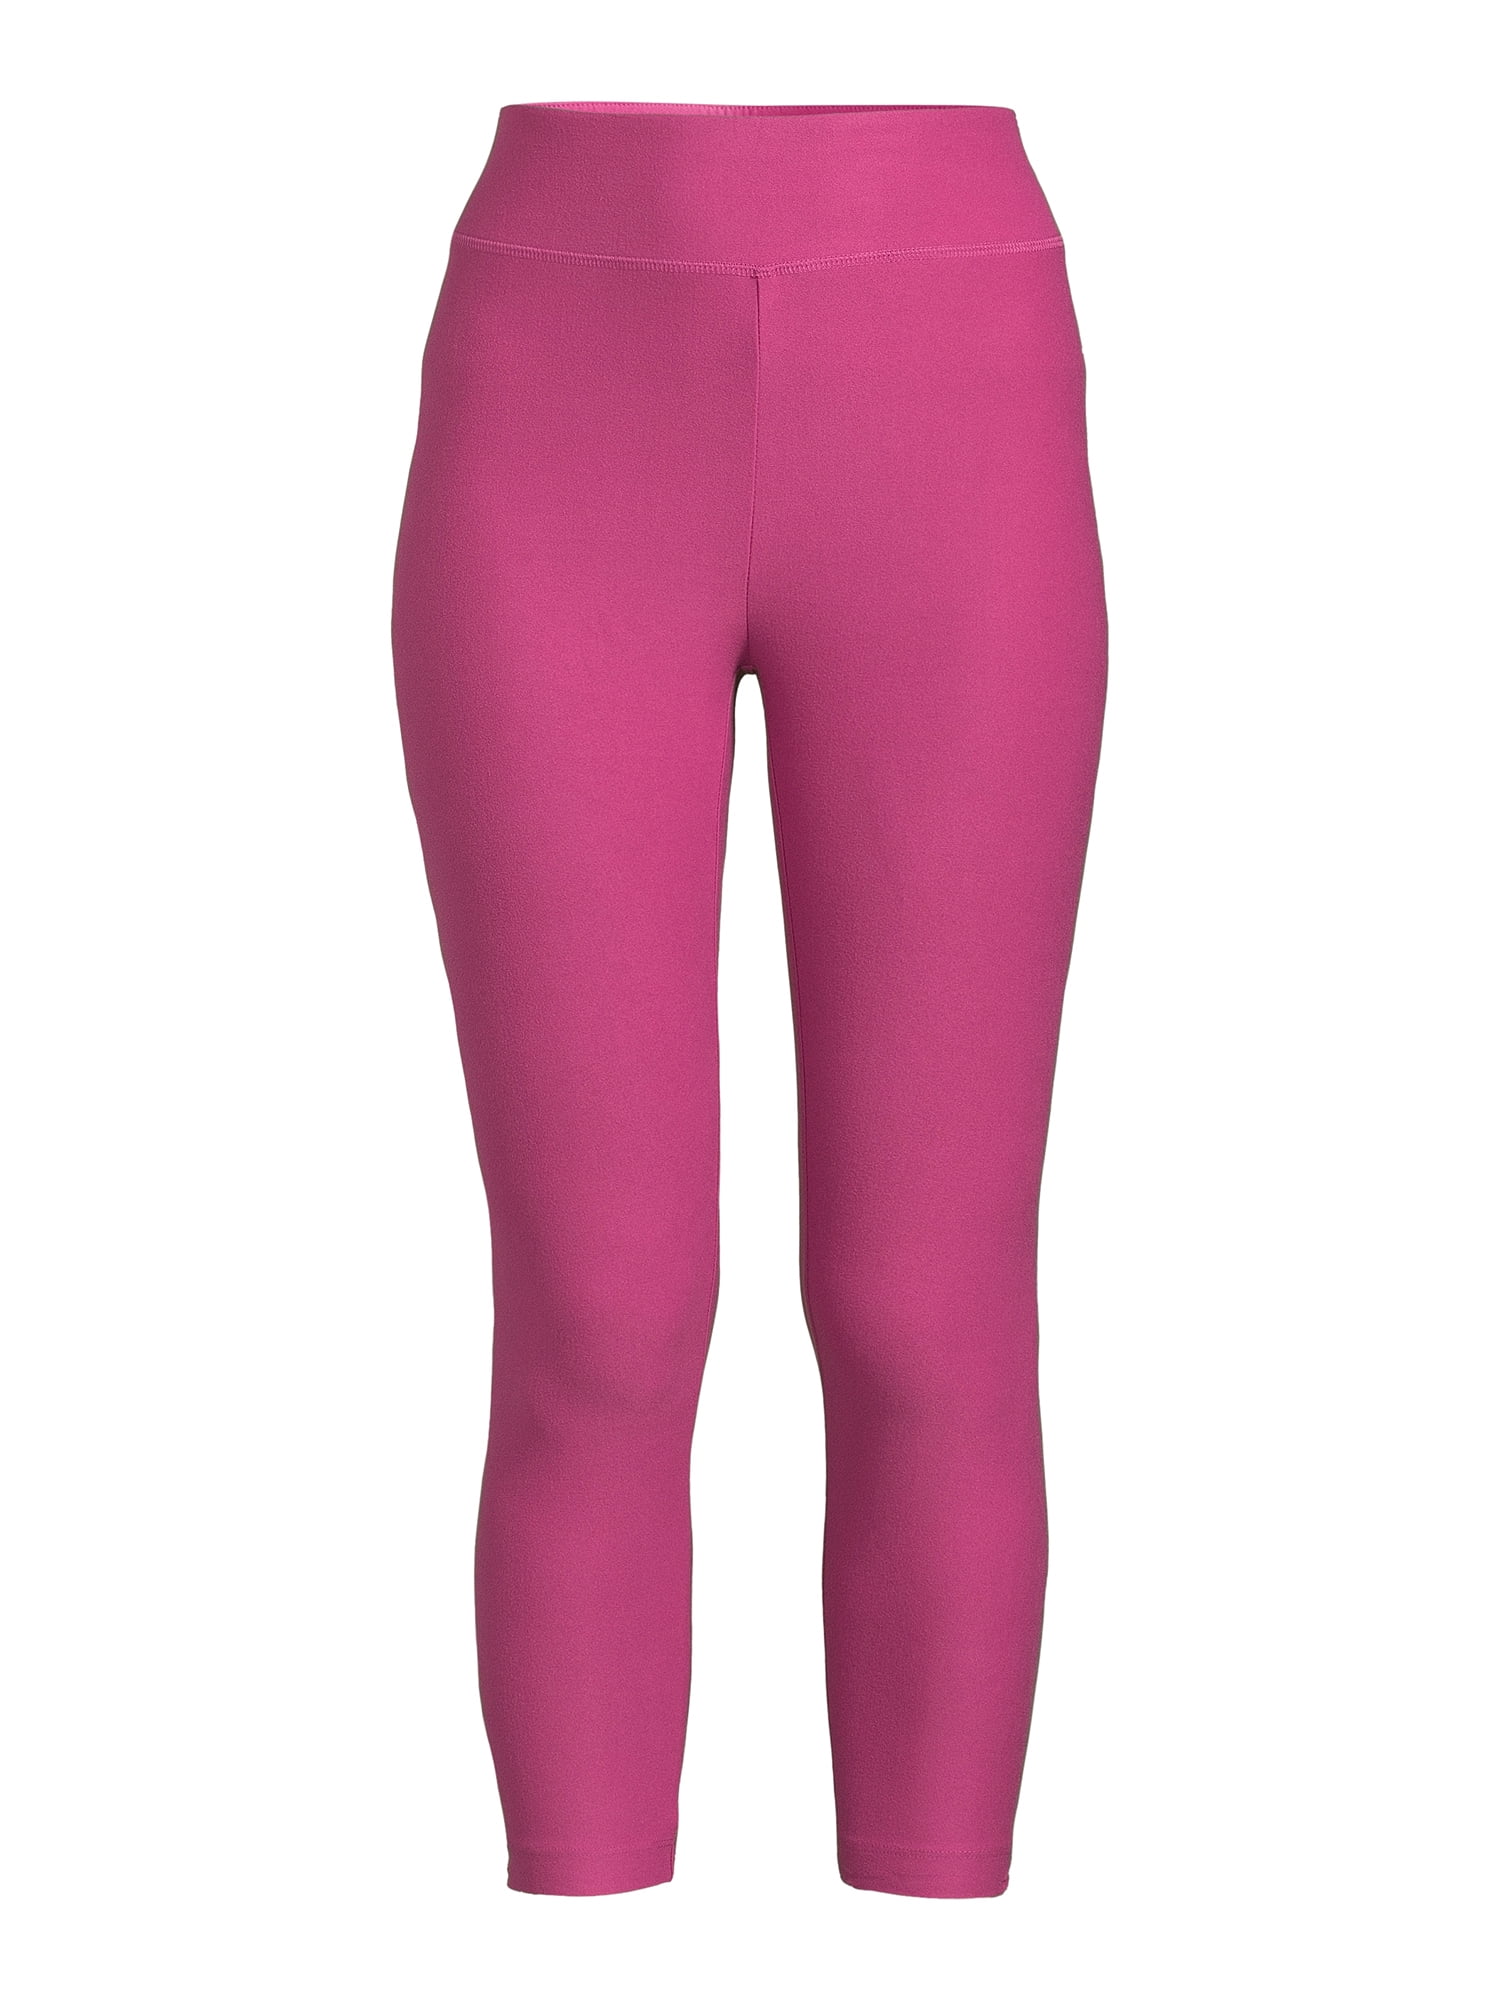 Lululemon Womens Mid Rise Knit Capri Leggings Hot Pink Size 6